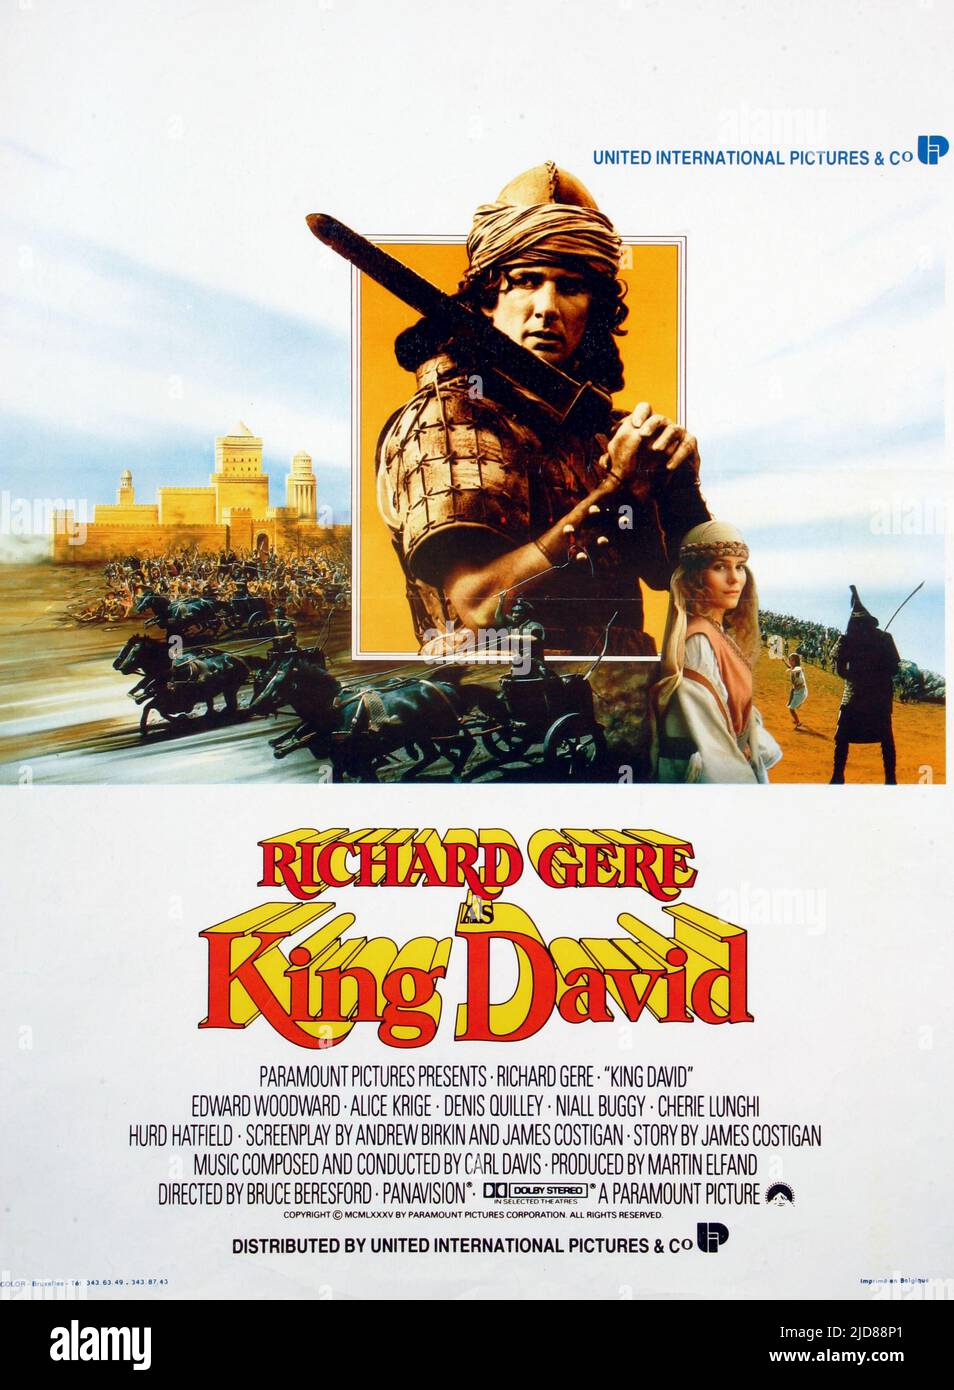 RICHARD GERE FILM POSTER, KING DAVID, 1985, Stock Photo